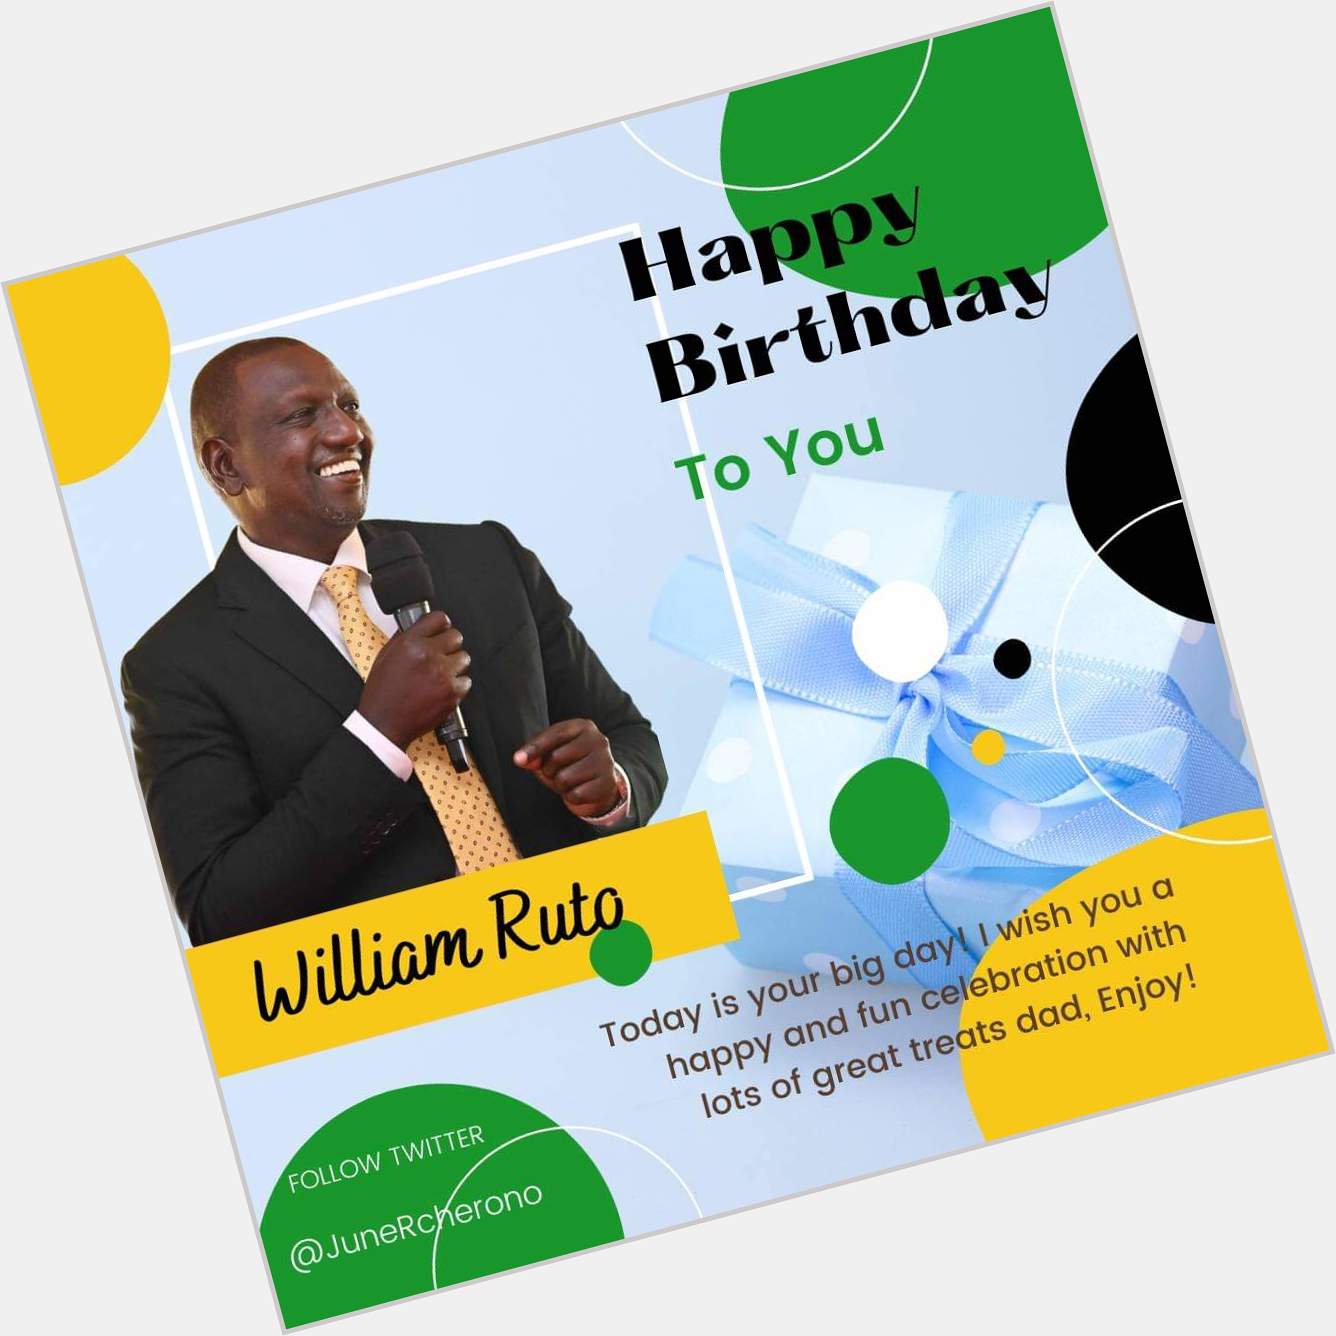 Happy birthday Dr William Ruto   Follow me 